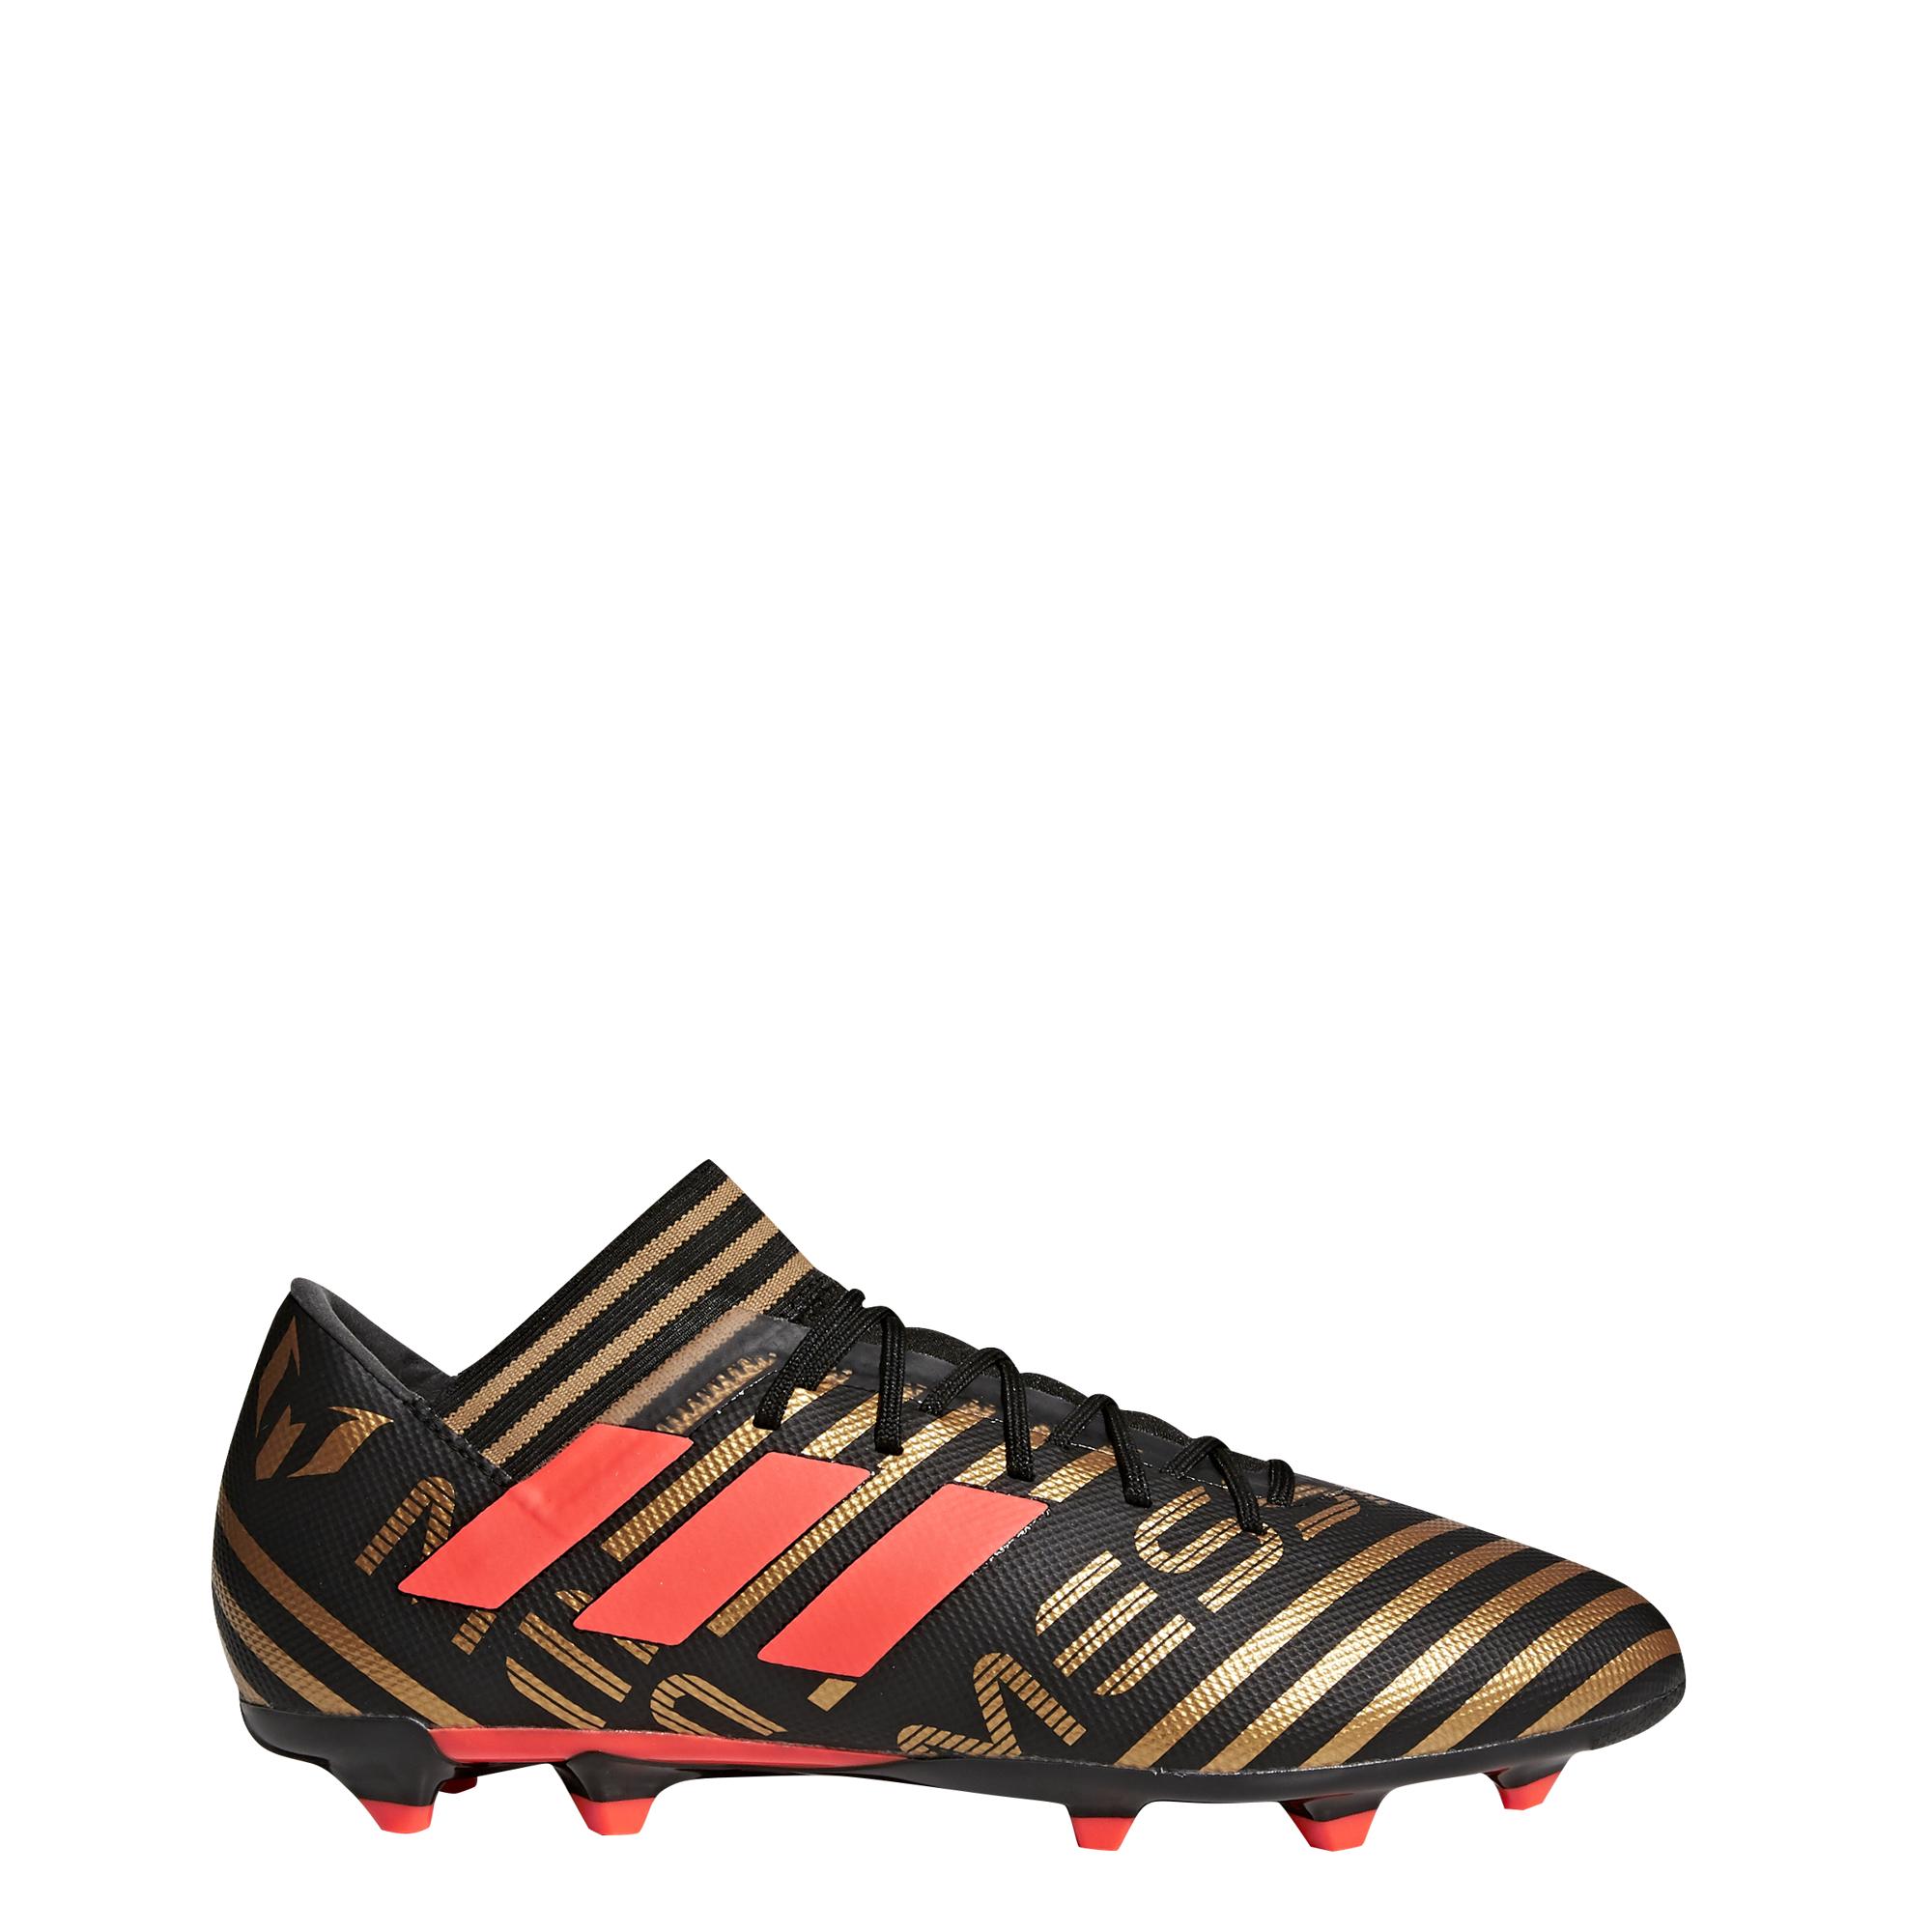 Adidas Football Shoes Nemeziz Messi 17.3